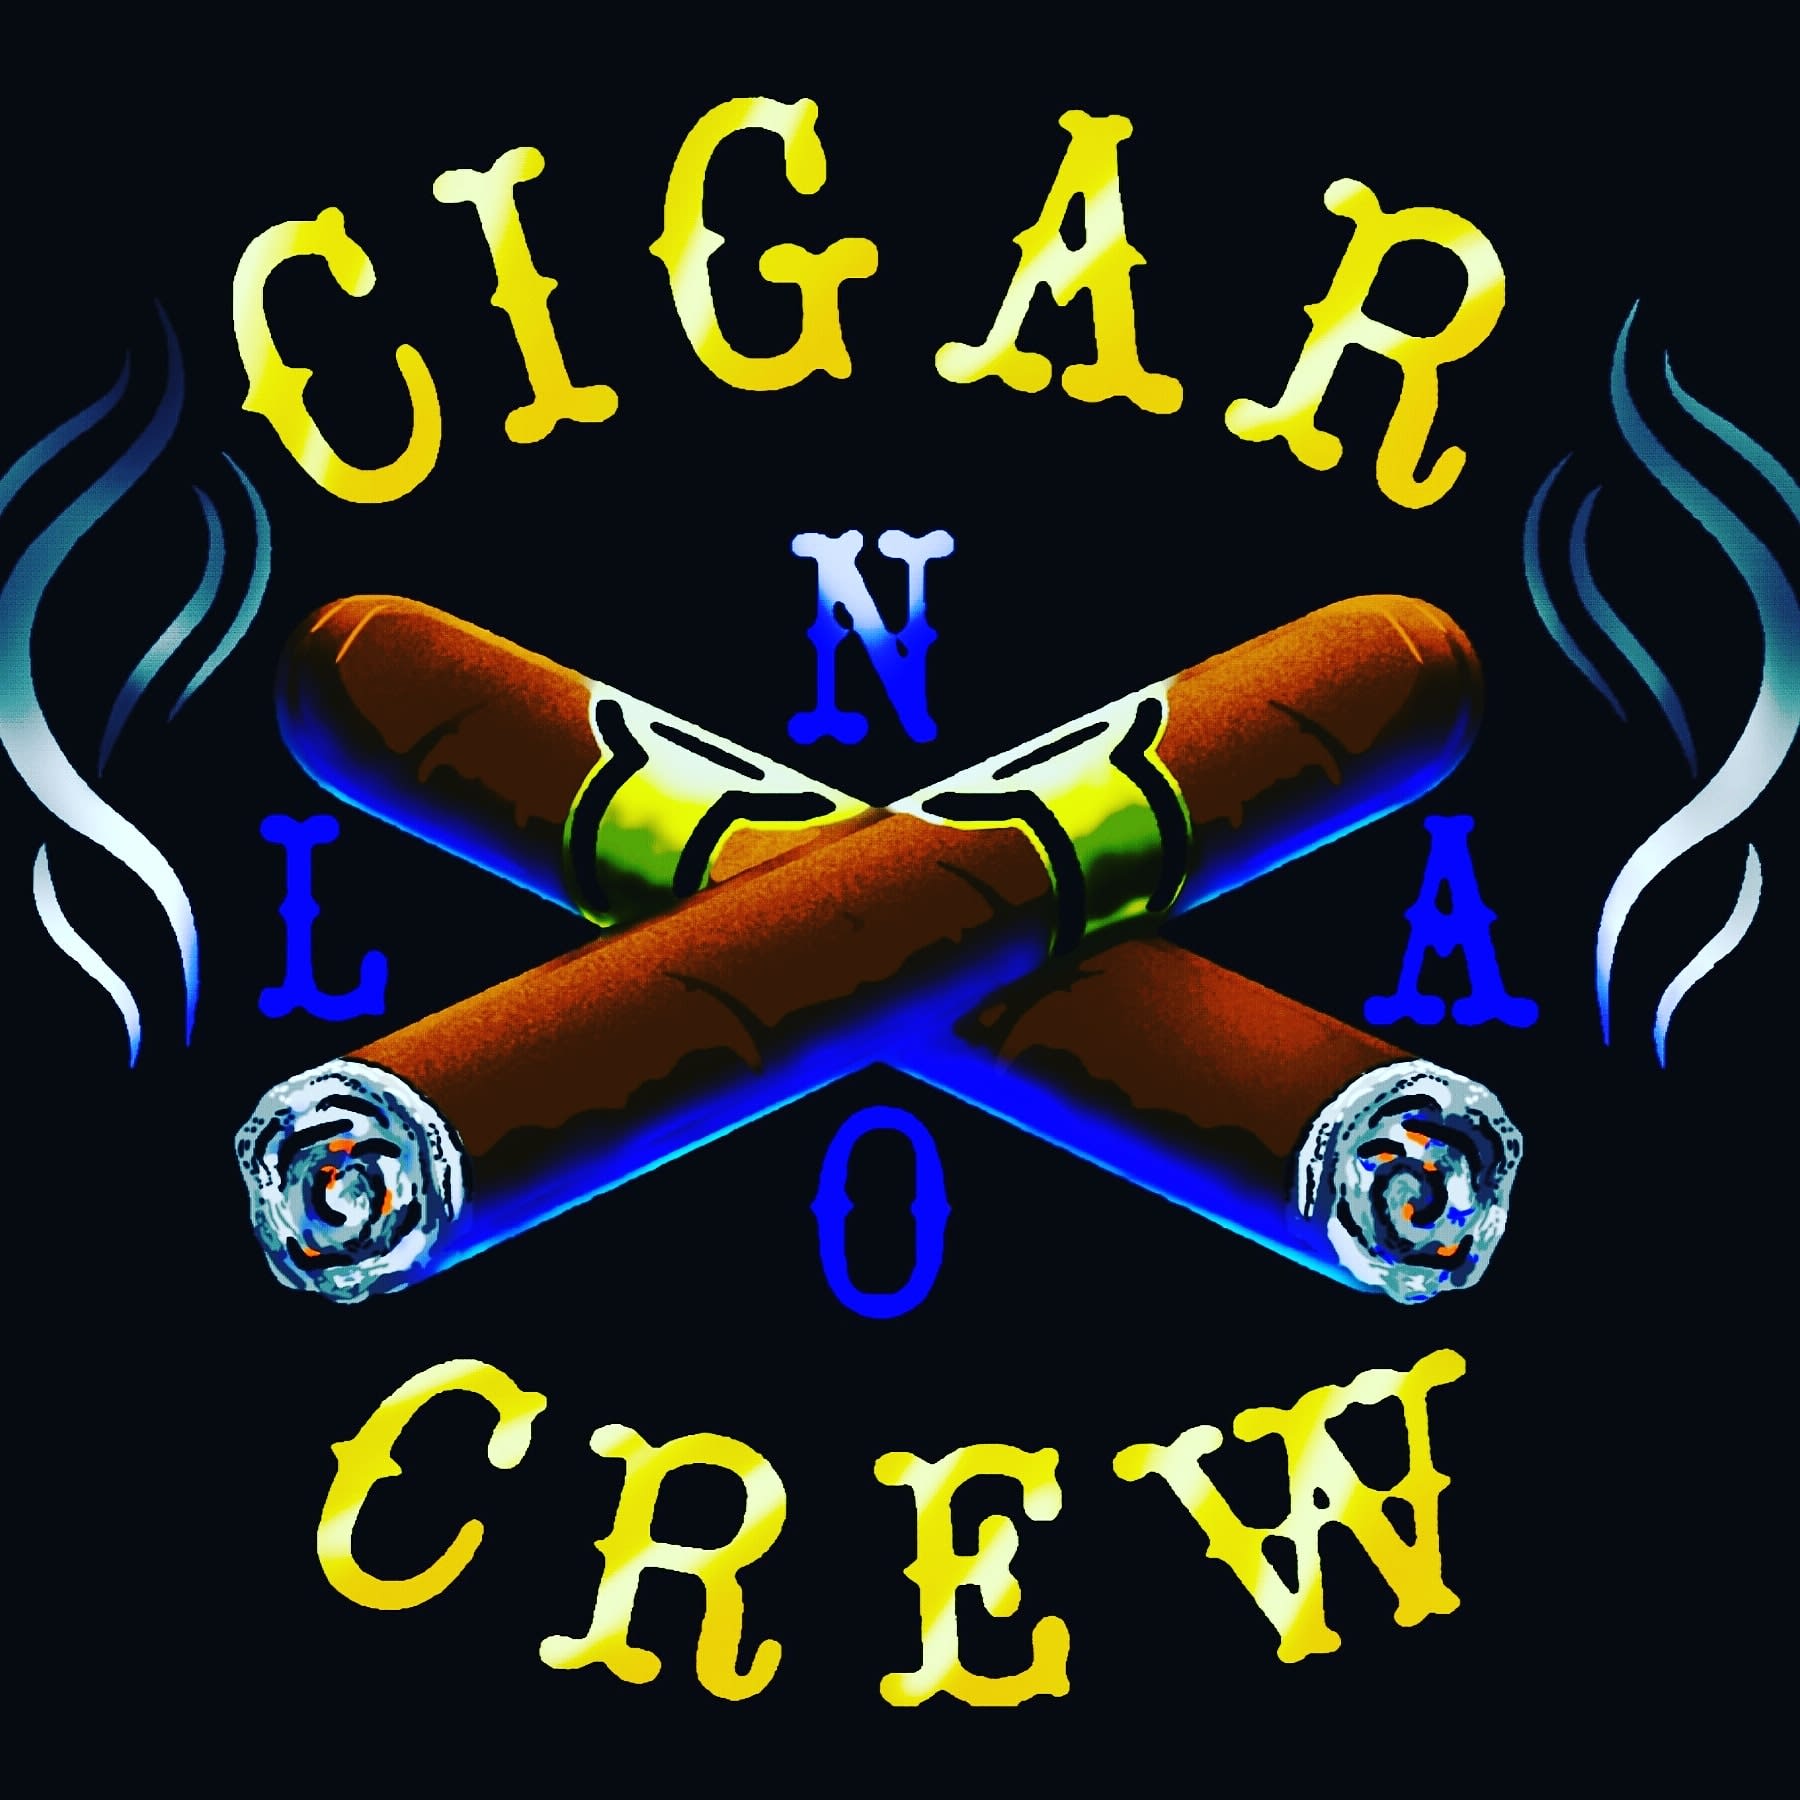 Nola Cigar Crew